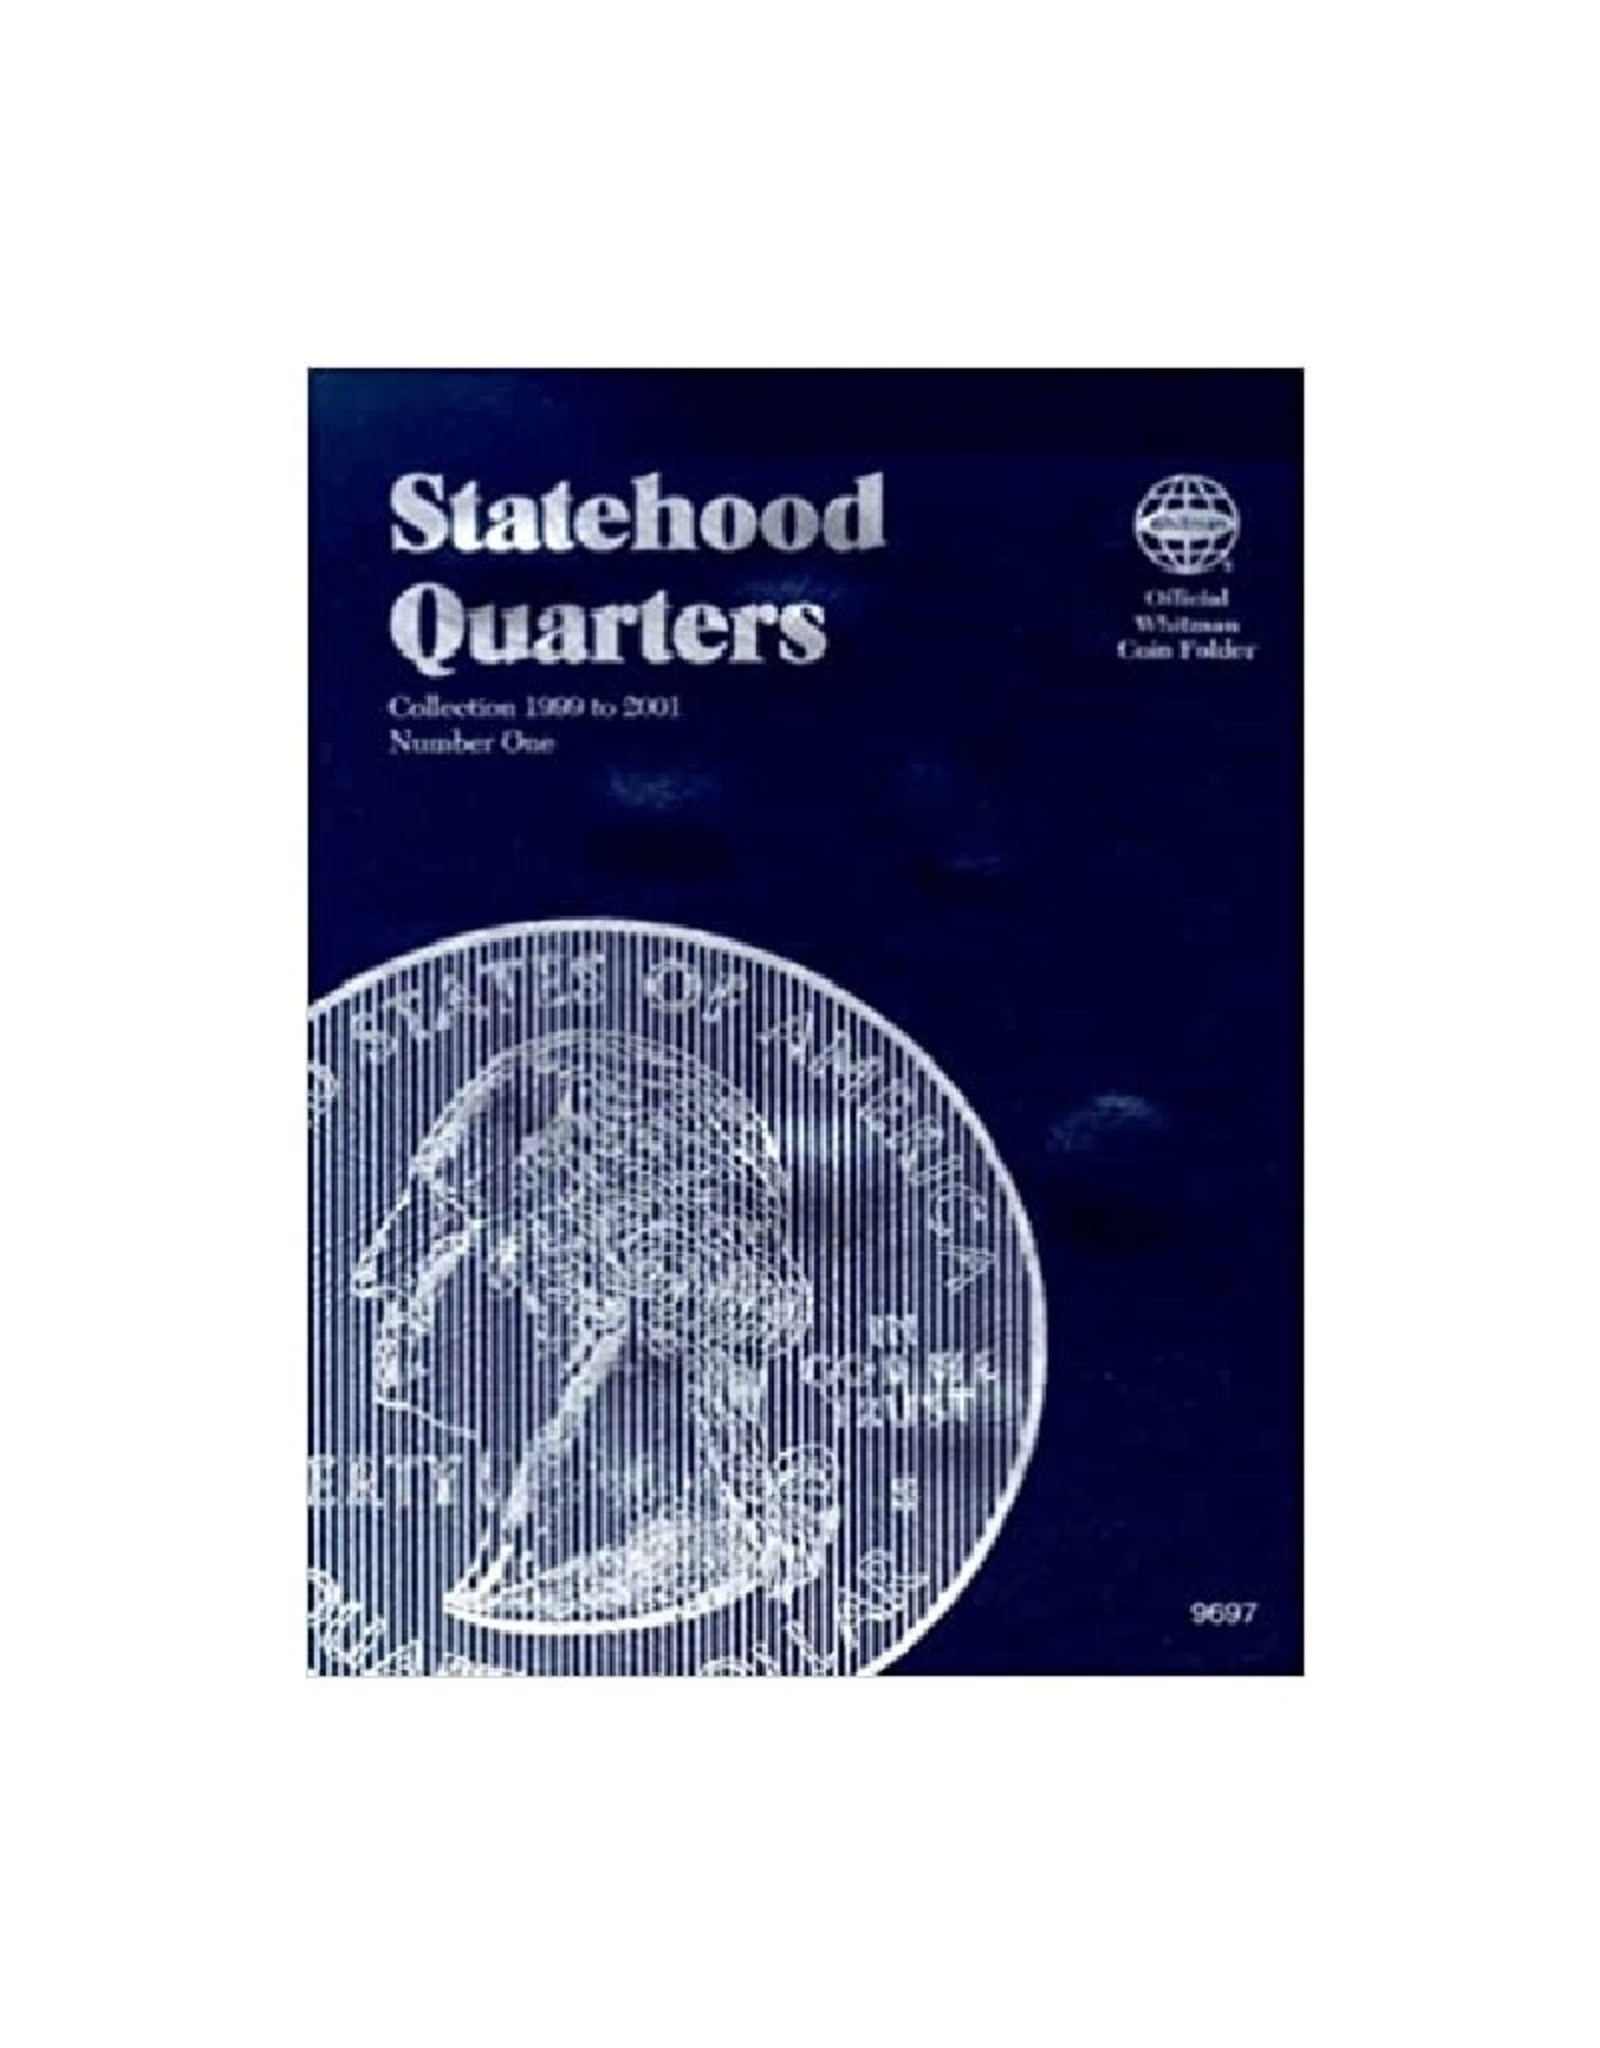 Statehood Quarters No. 1 (1999-2001)